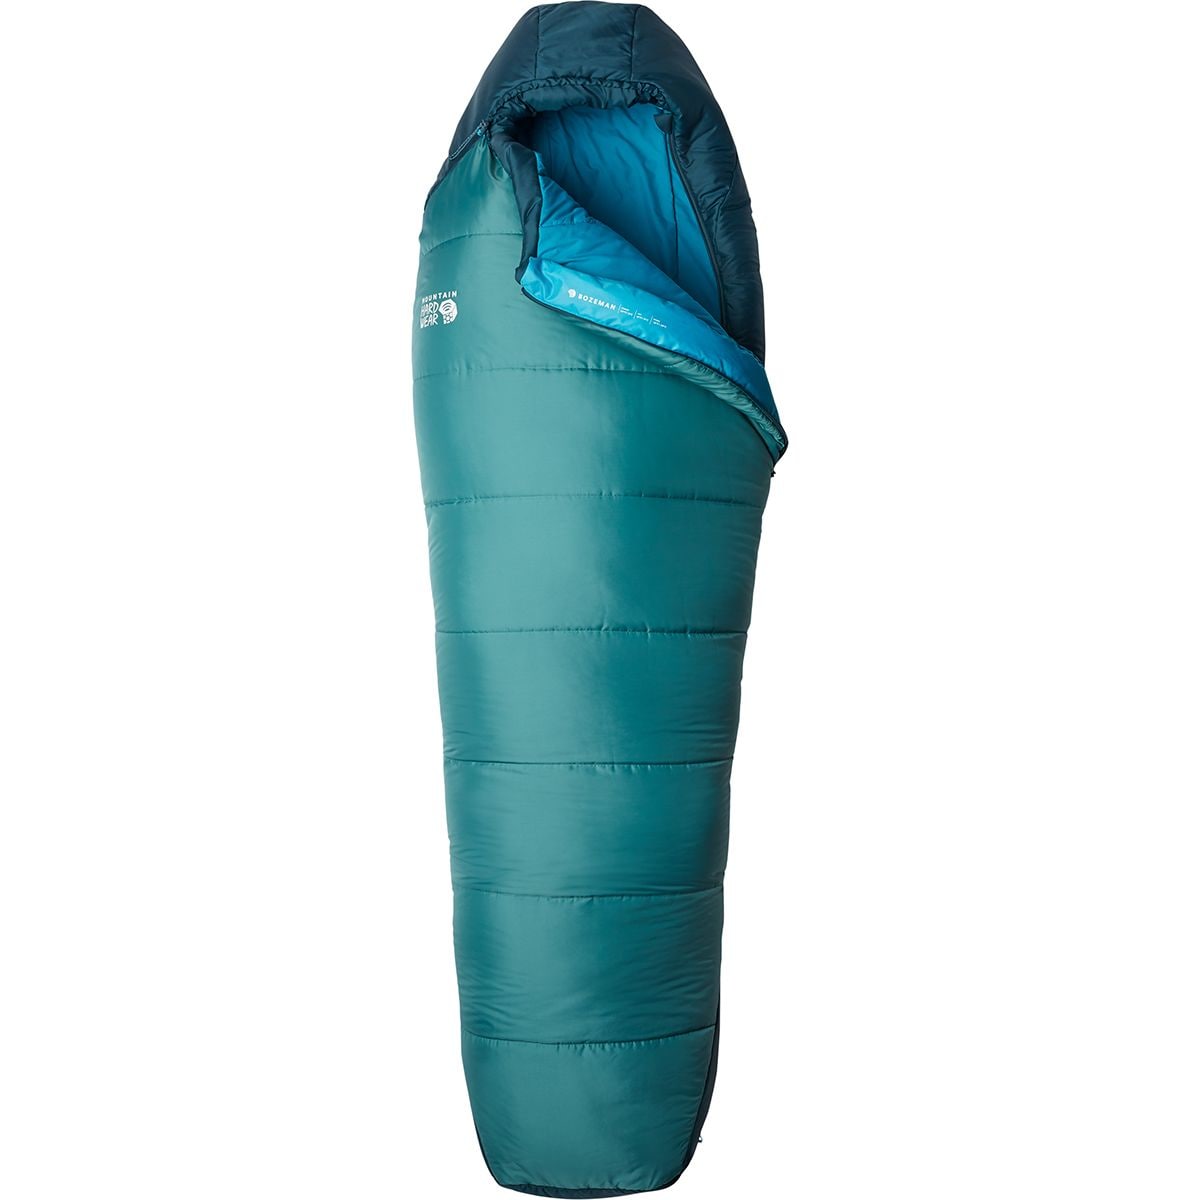 Mountain Hardwear Bozeman 15 Sleeping Bag: 15F Synthetic